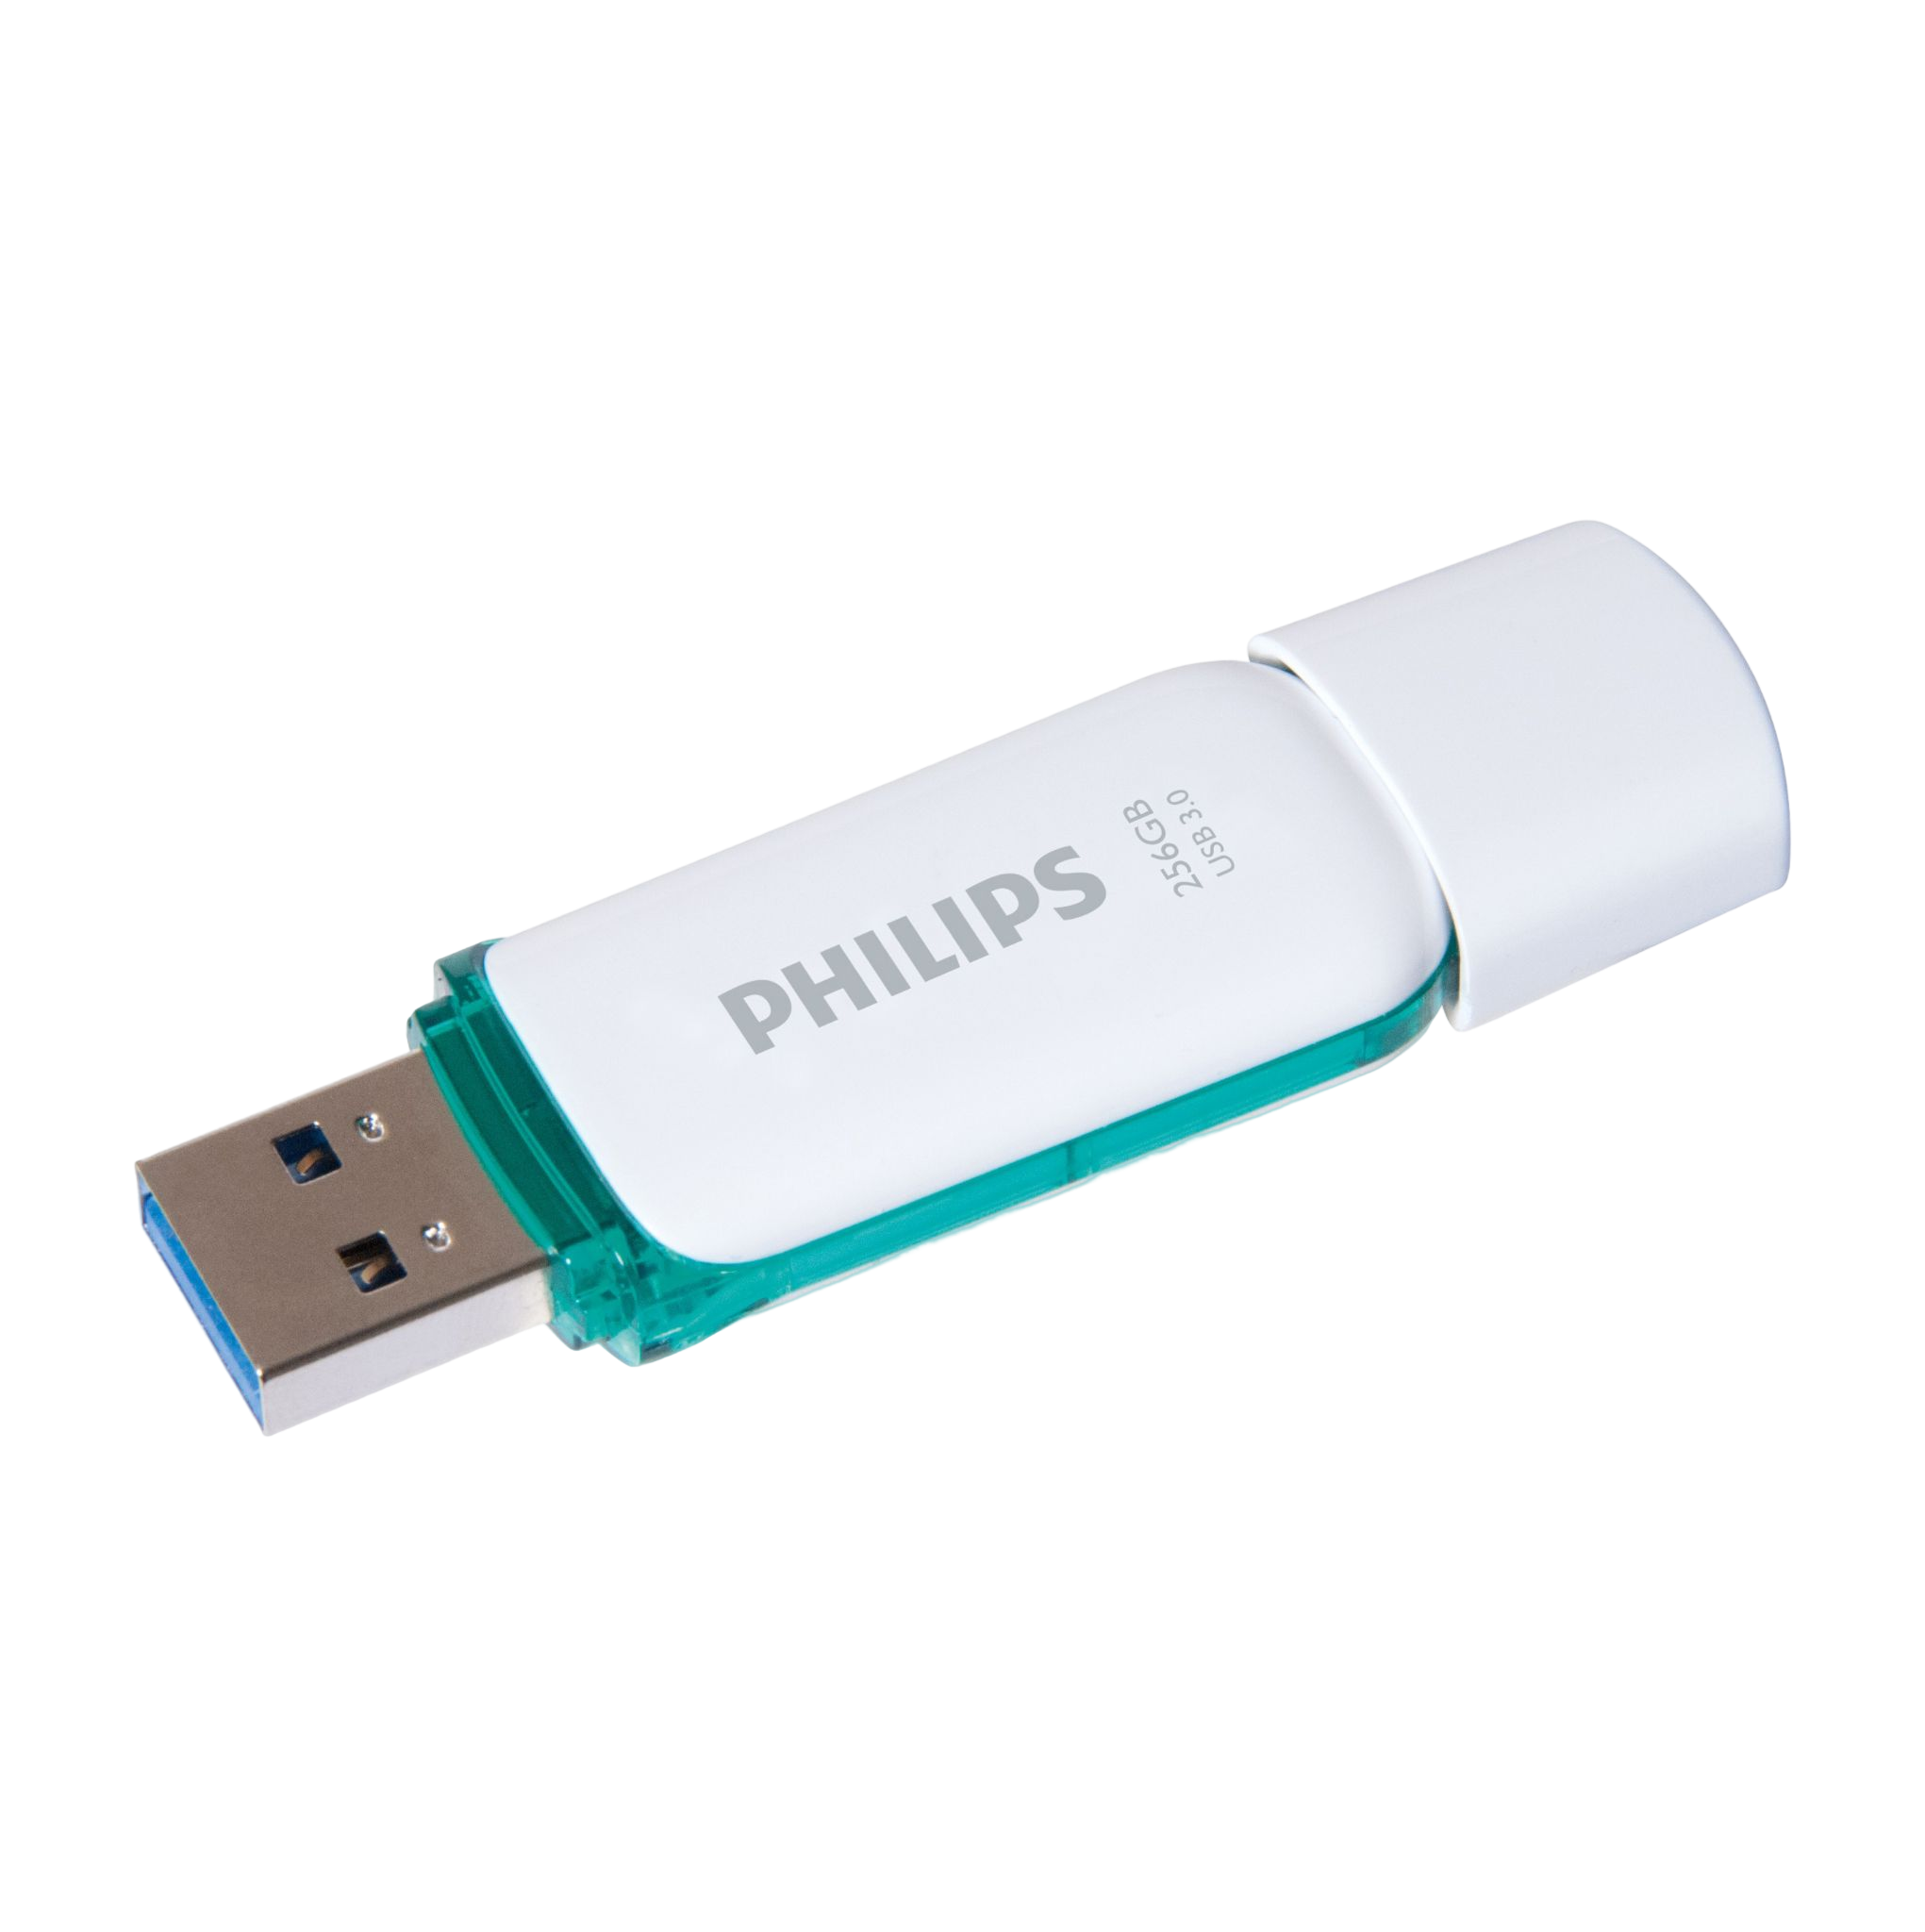 Edition Green®, (Weiß, PHILIPS Spring 256 Snow 100 MB/s GB) USB-Stick